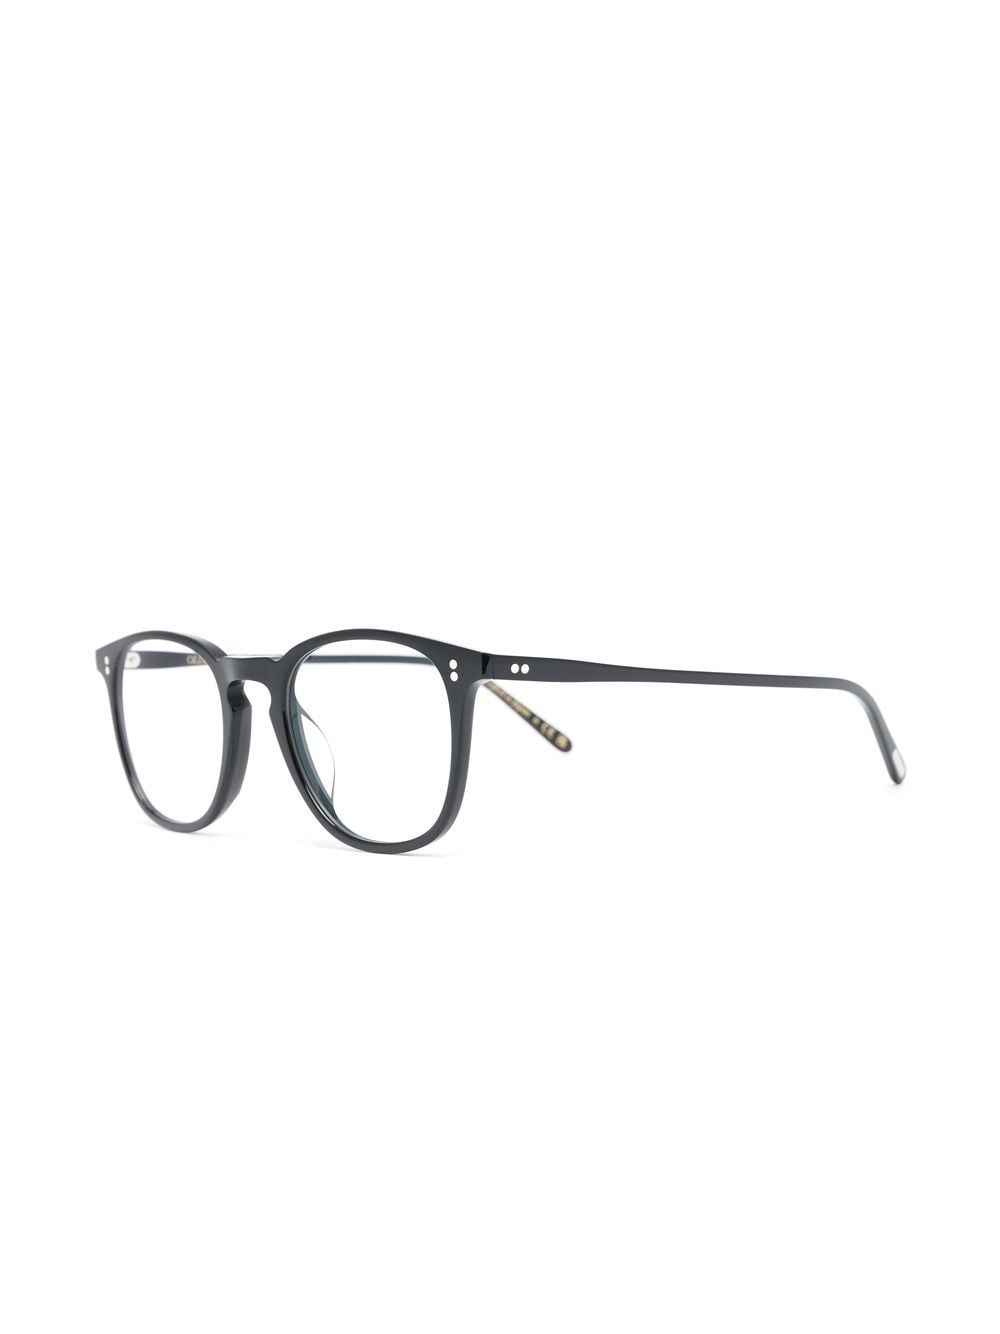 Finley 1993 optical glasses - 2